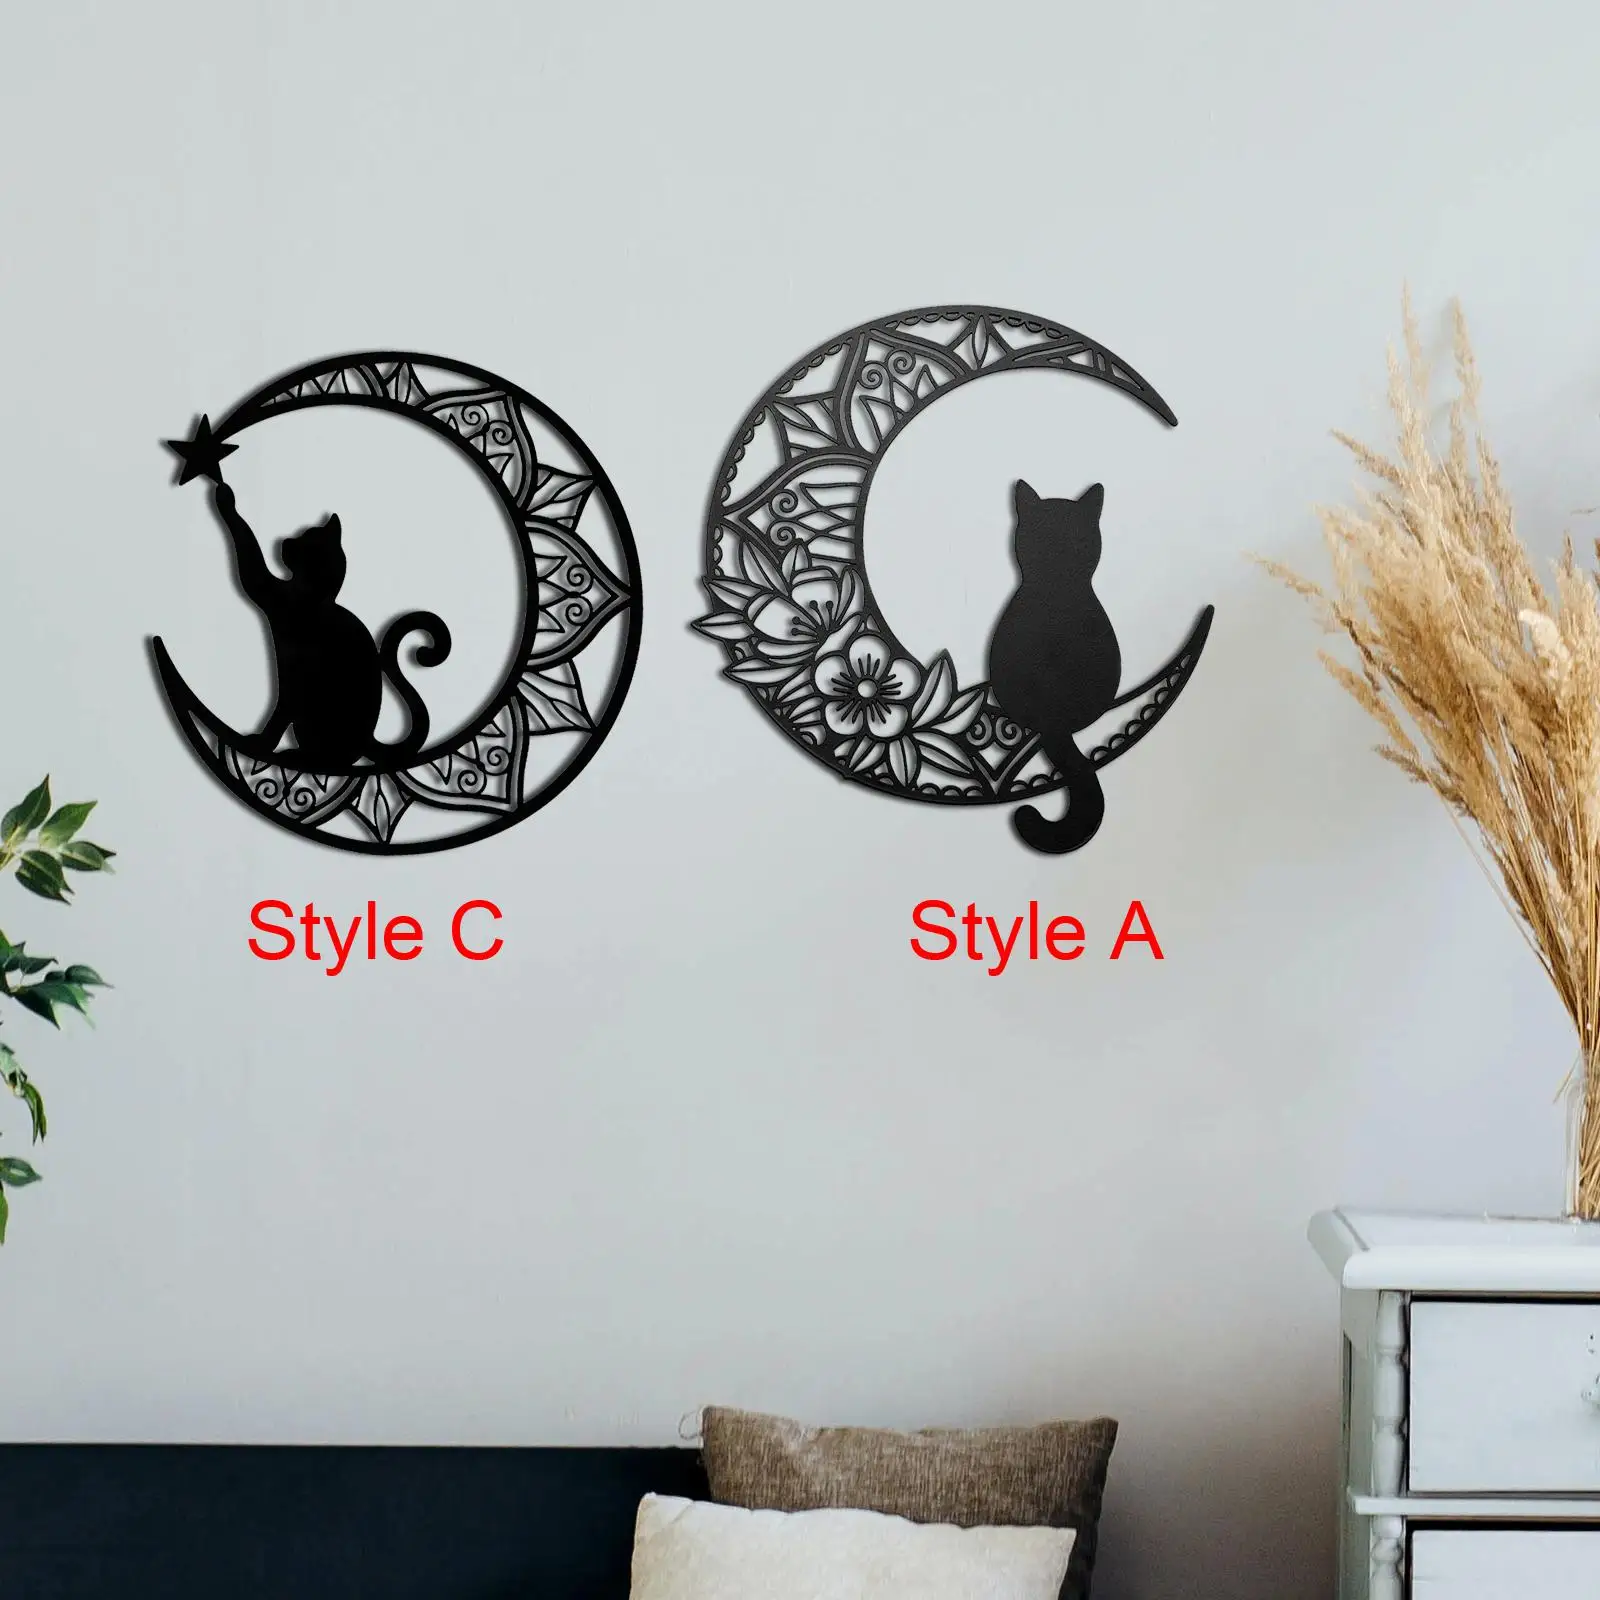 33cm Metal Wall Art Decor, Cat Silhouette, Cat Decoration, Wall Hanging Ornament